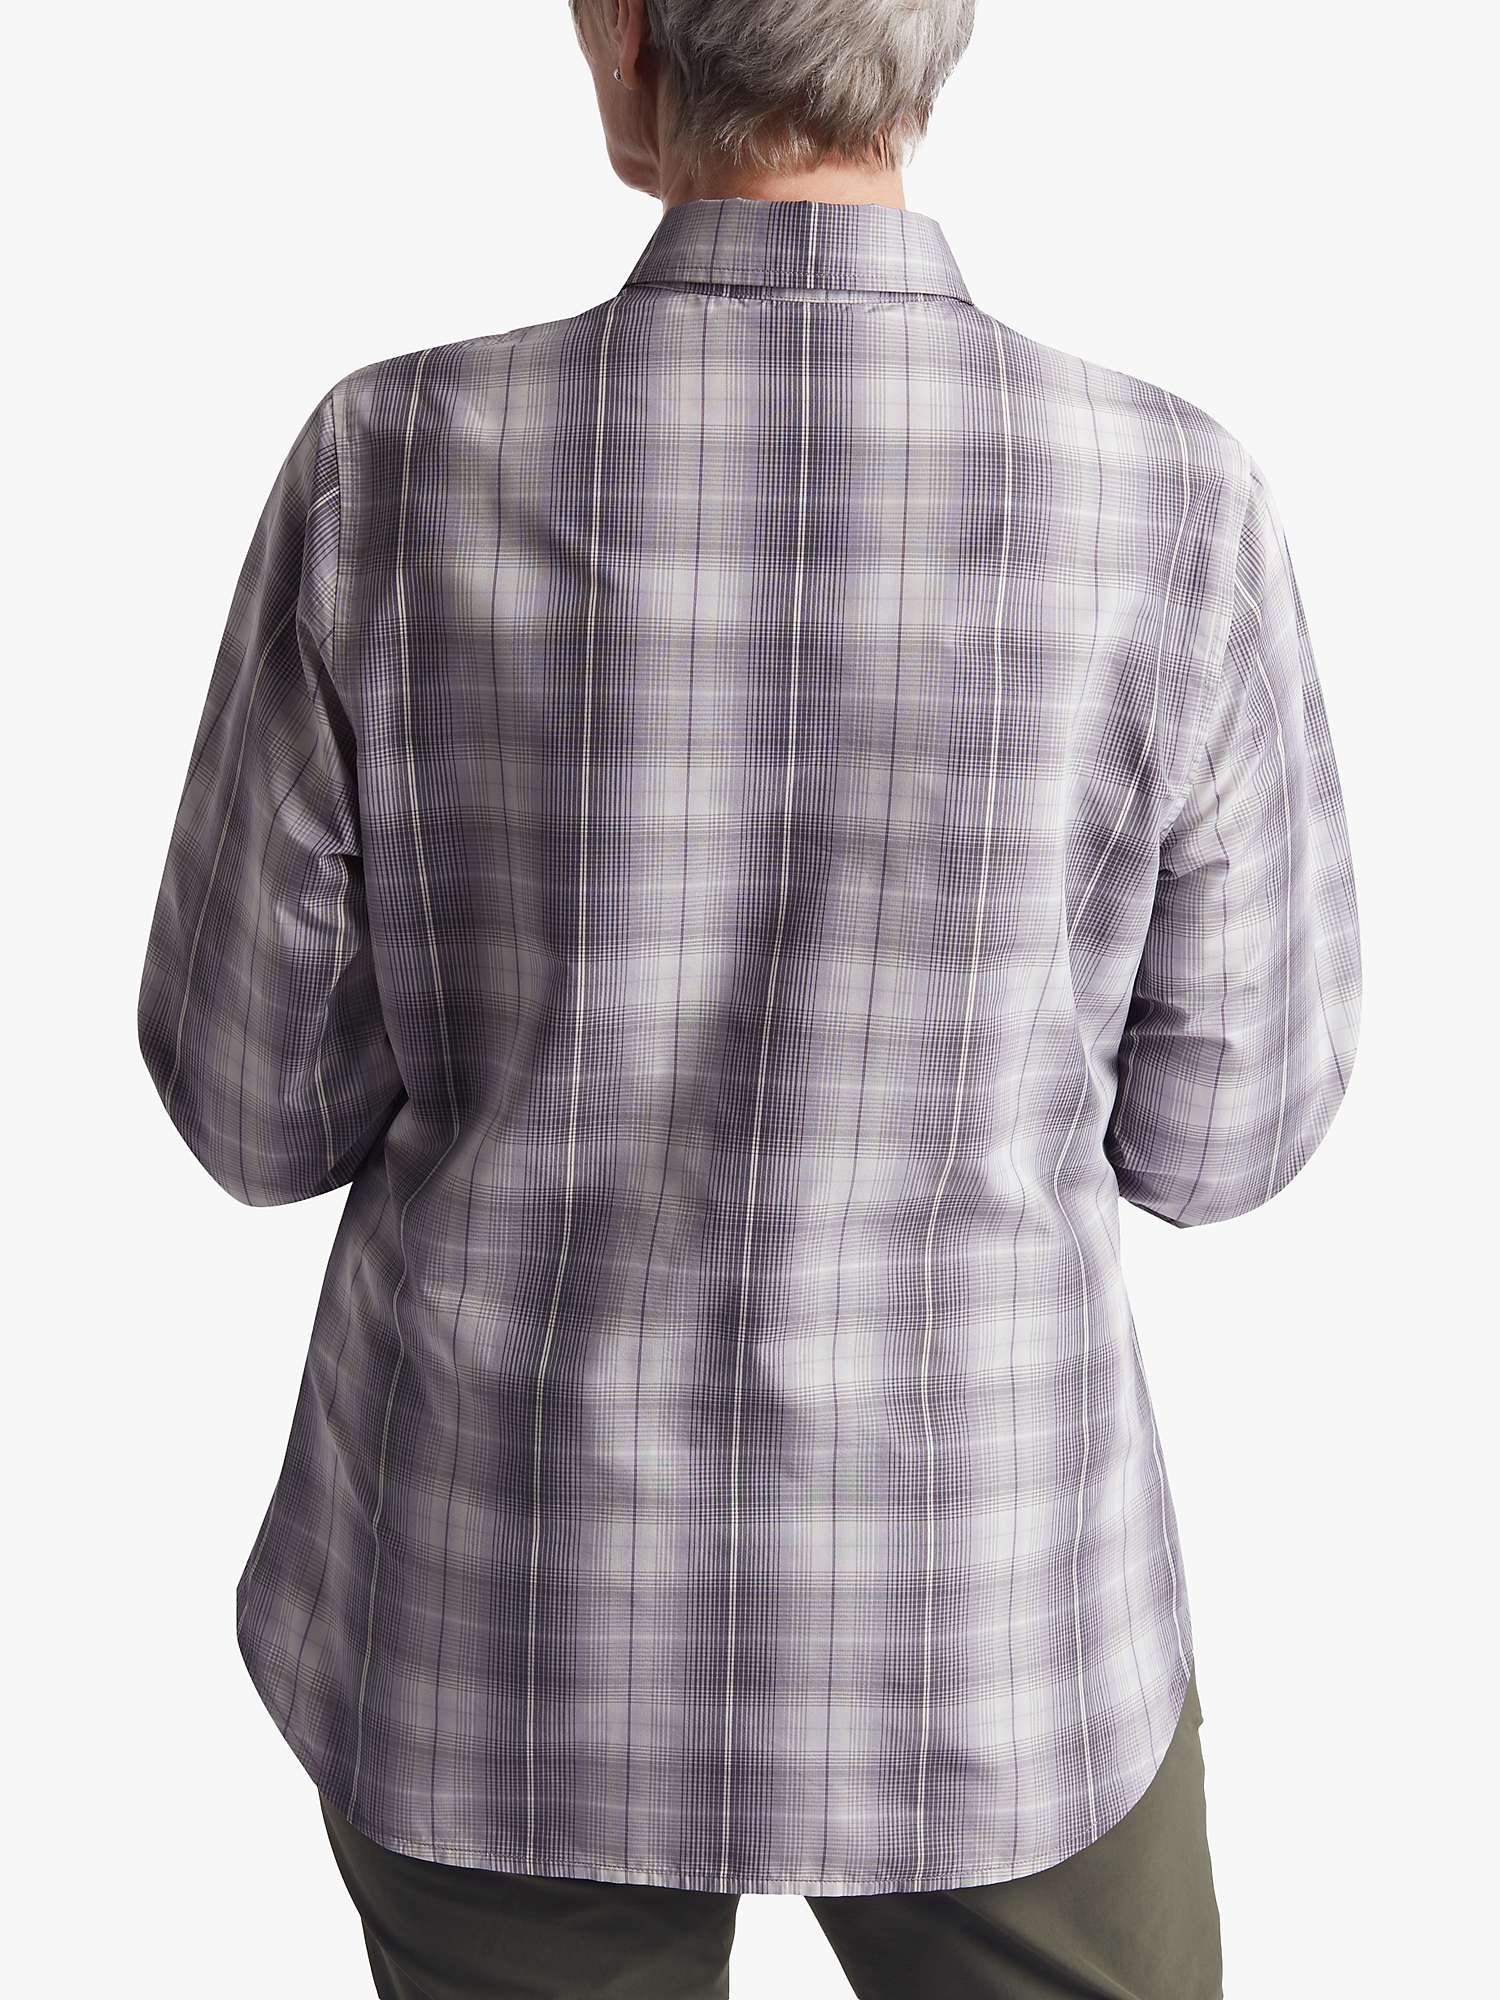 Buy Rohan Women's Coast Check Long Sleeve Shirt, Mauve Grey/Orchid Online at johnlewis.com